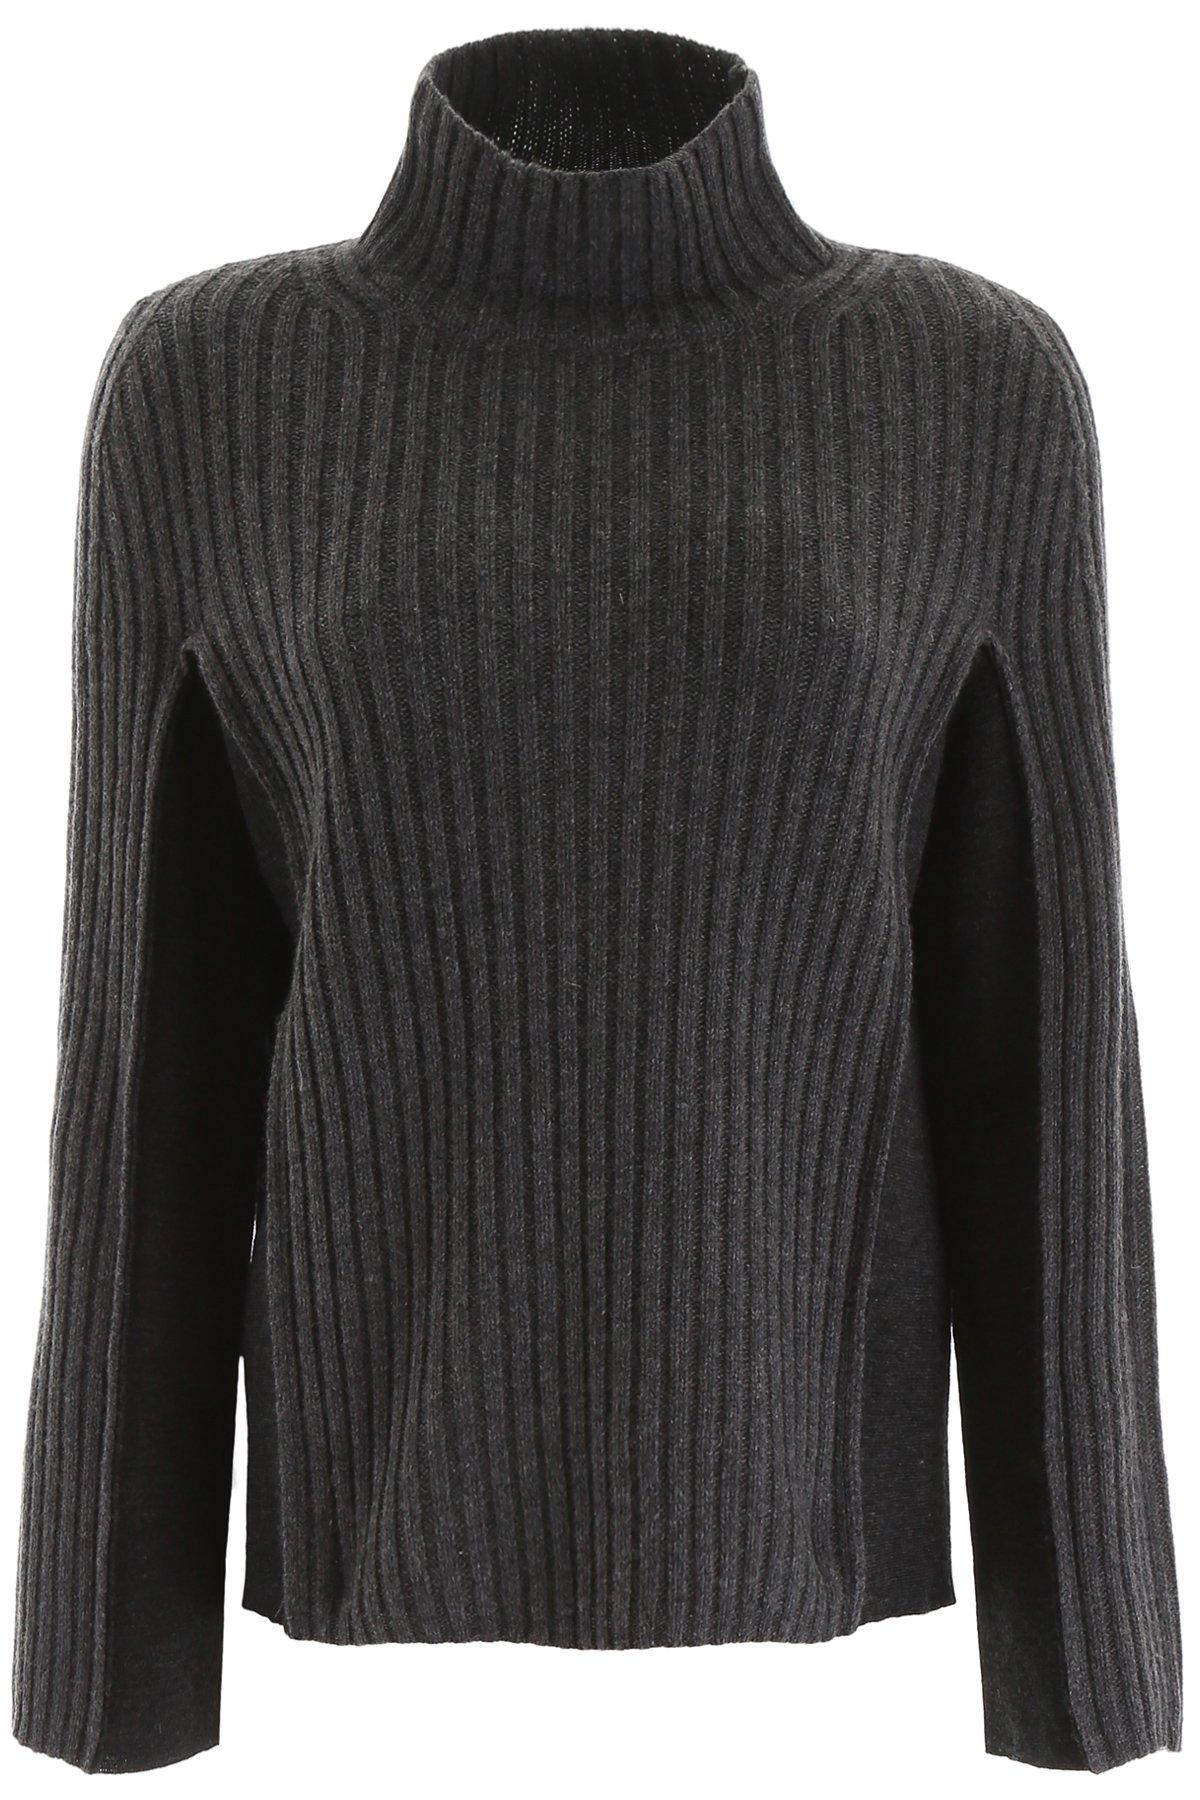 Maison Margiela Wool Turtleneck Ribbed Knit Sweater in Grey (Gray) - Lyst